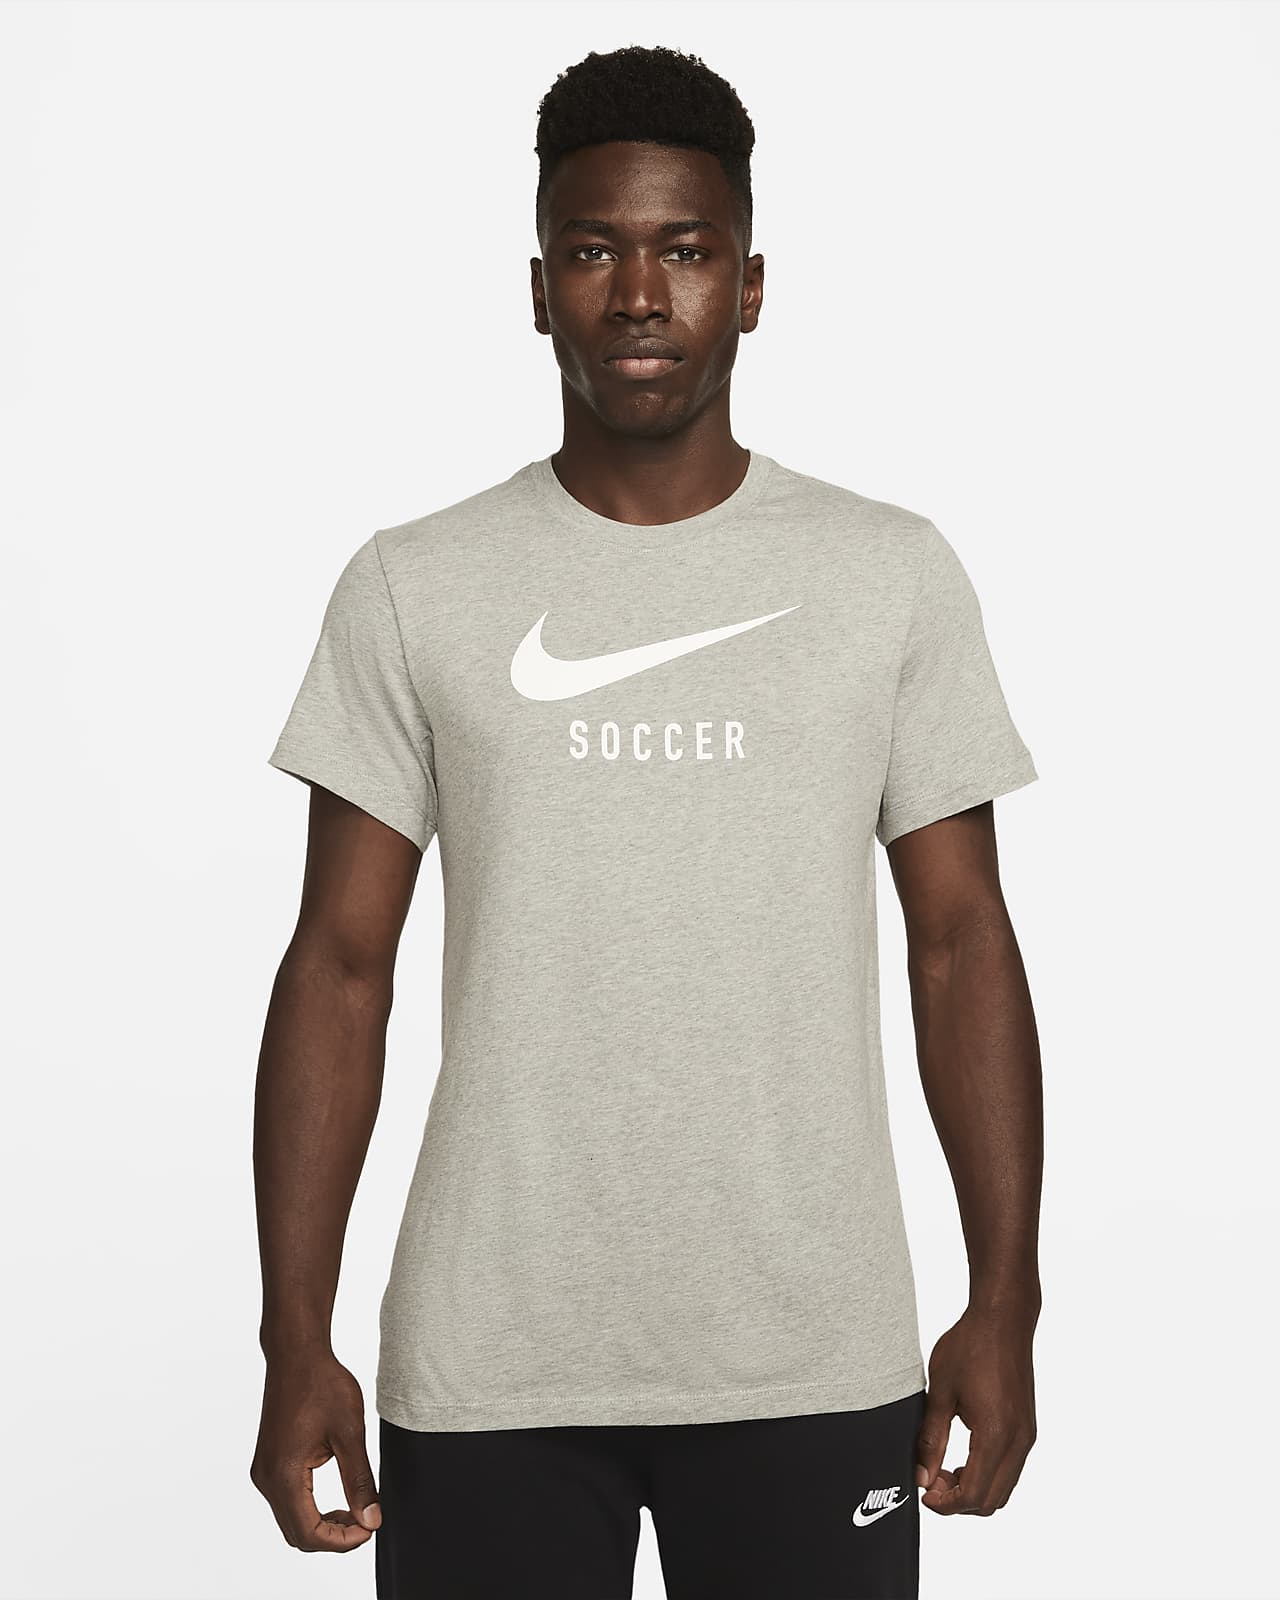 Nike Swoosh Soccer Nike.com